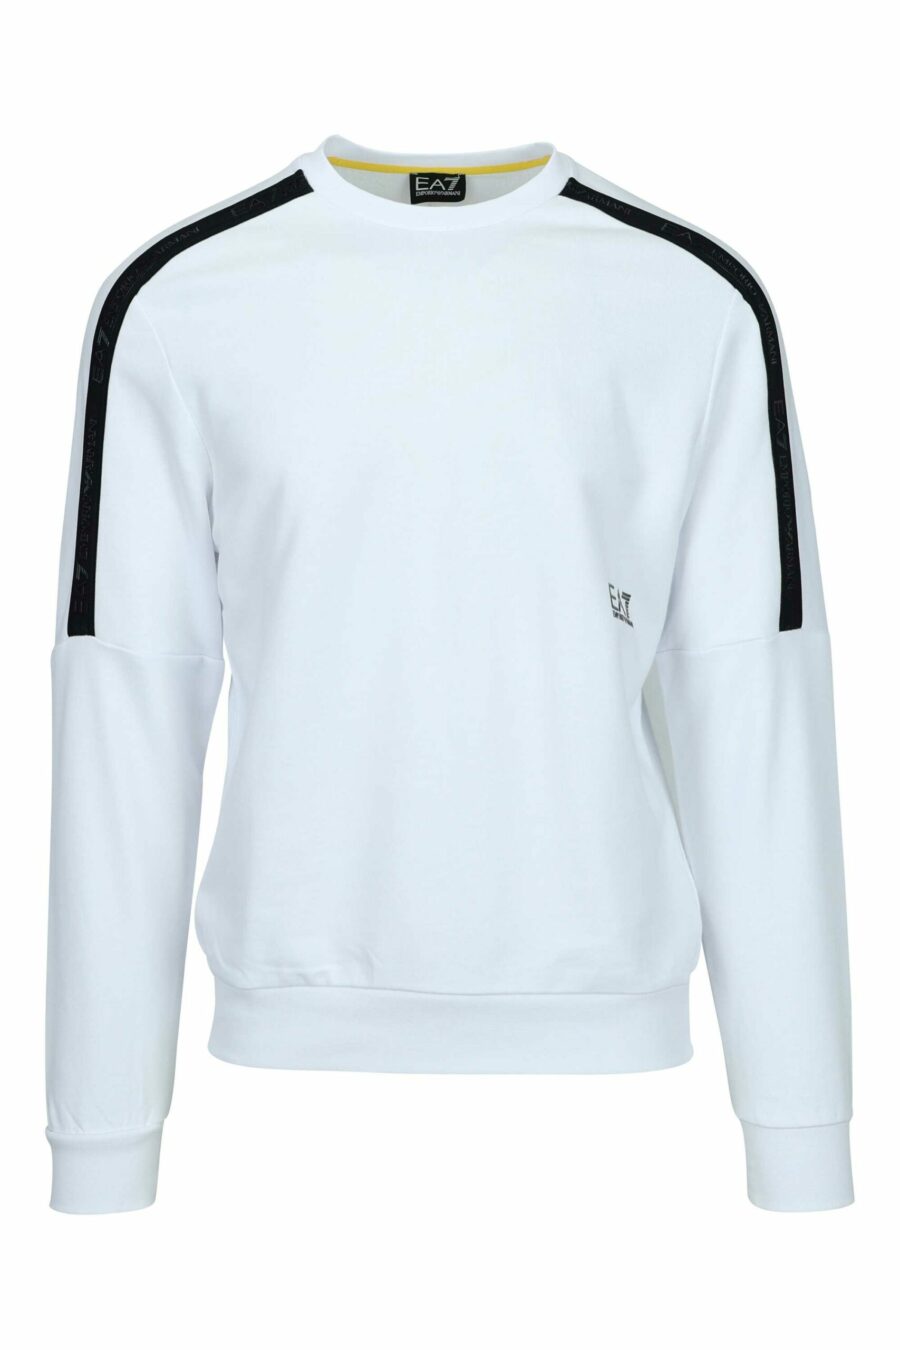 Sweat blanc avec mini-logo "lux identity" sur ruban monochrome - 8058947443338 scaled